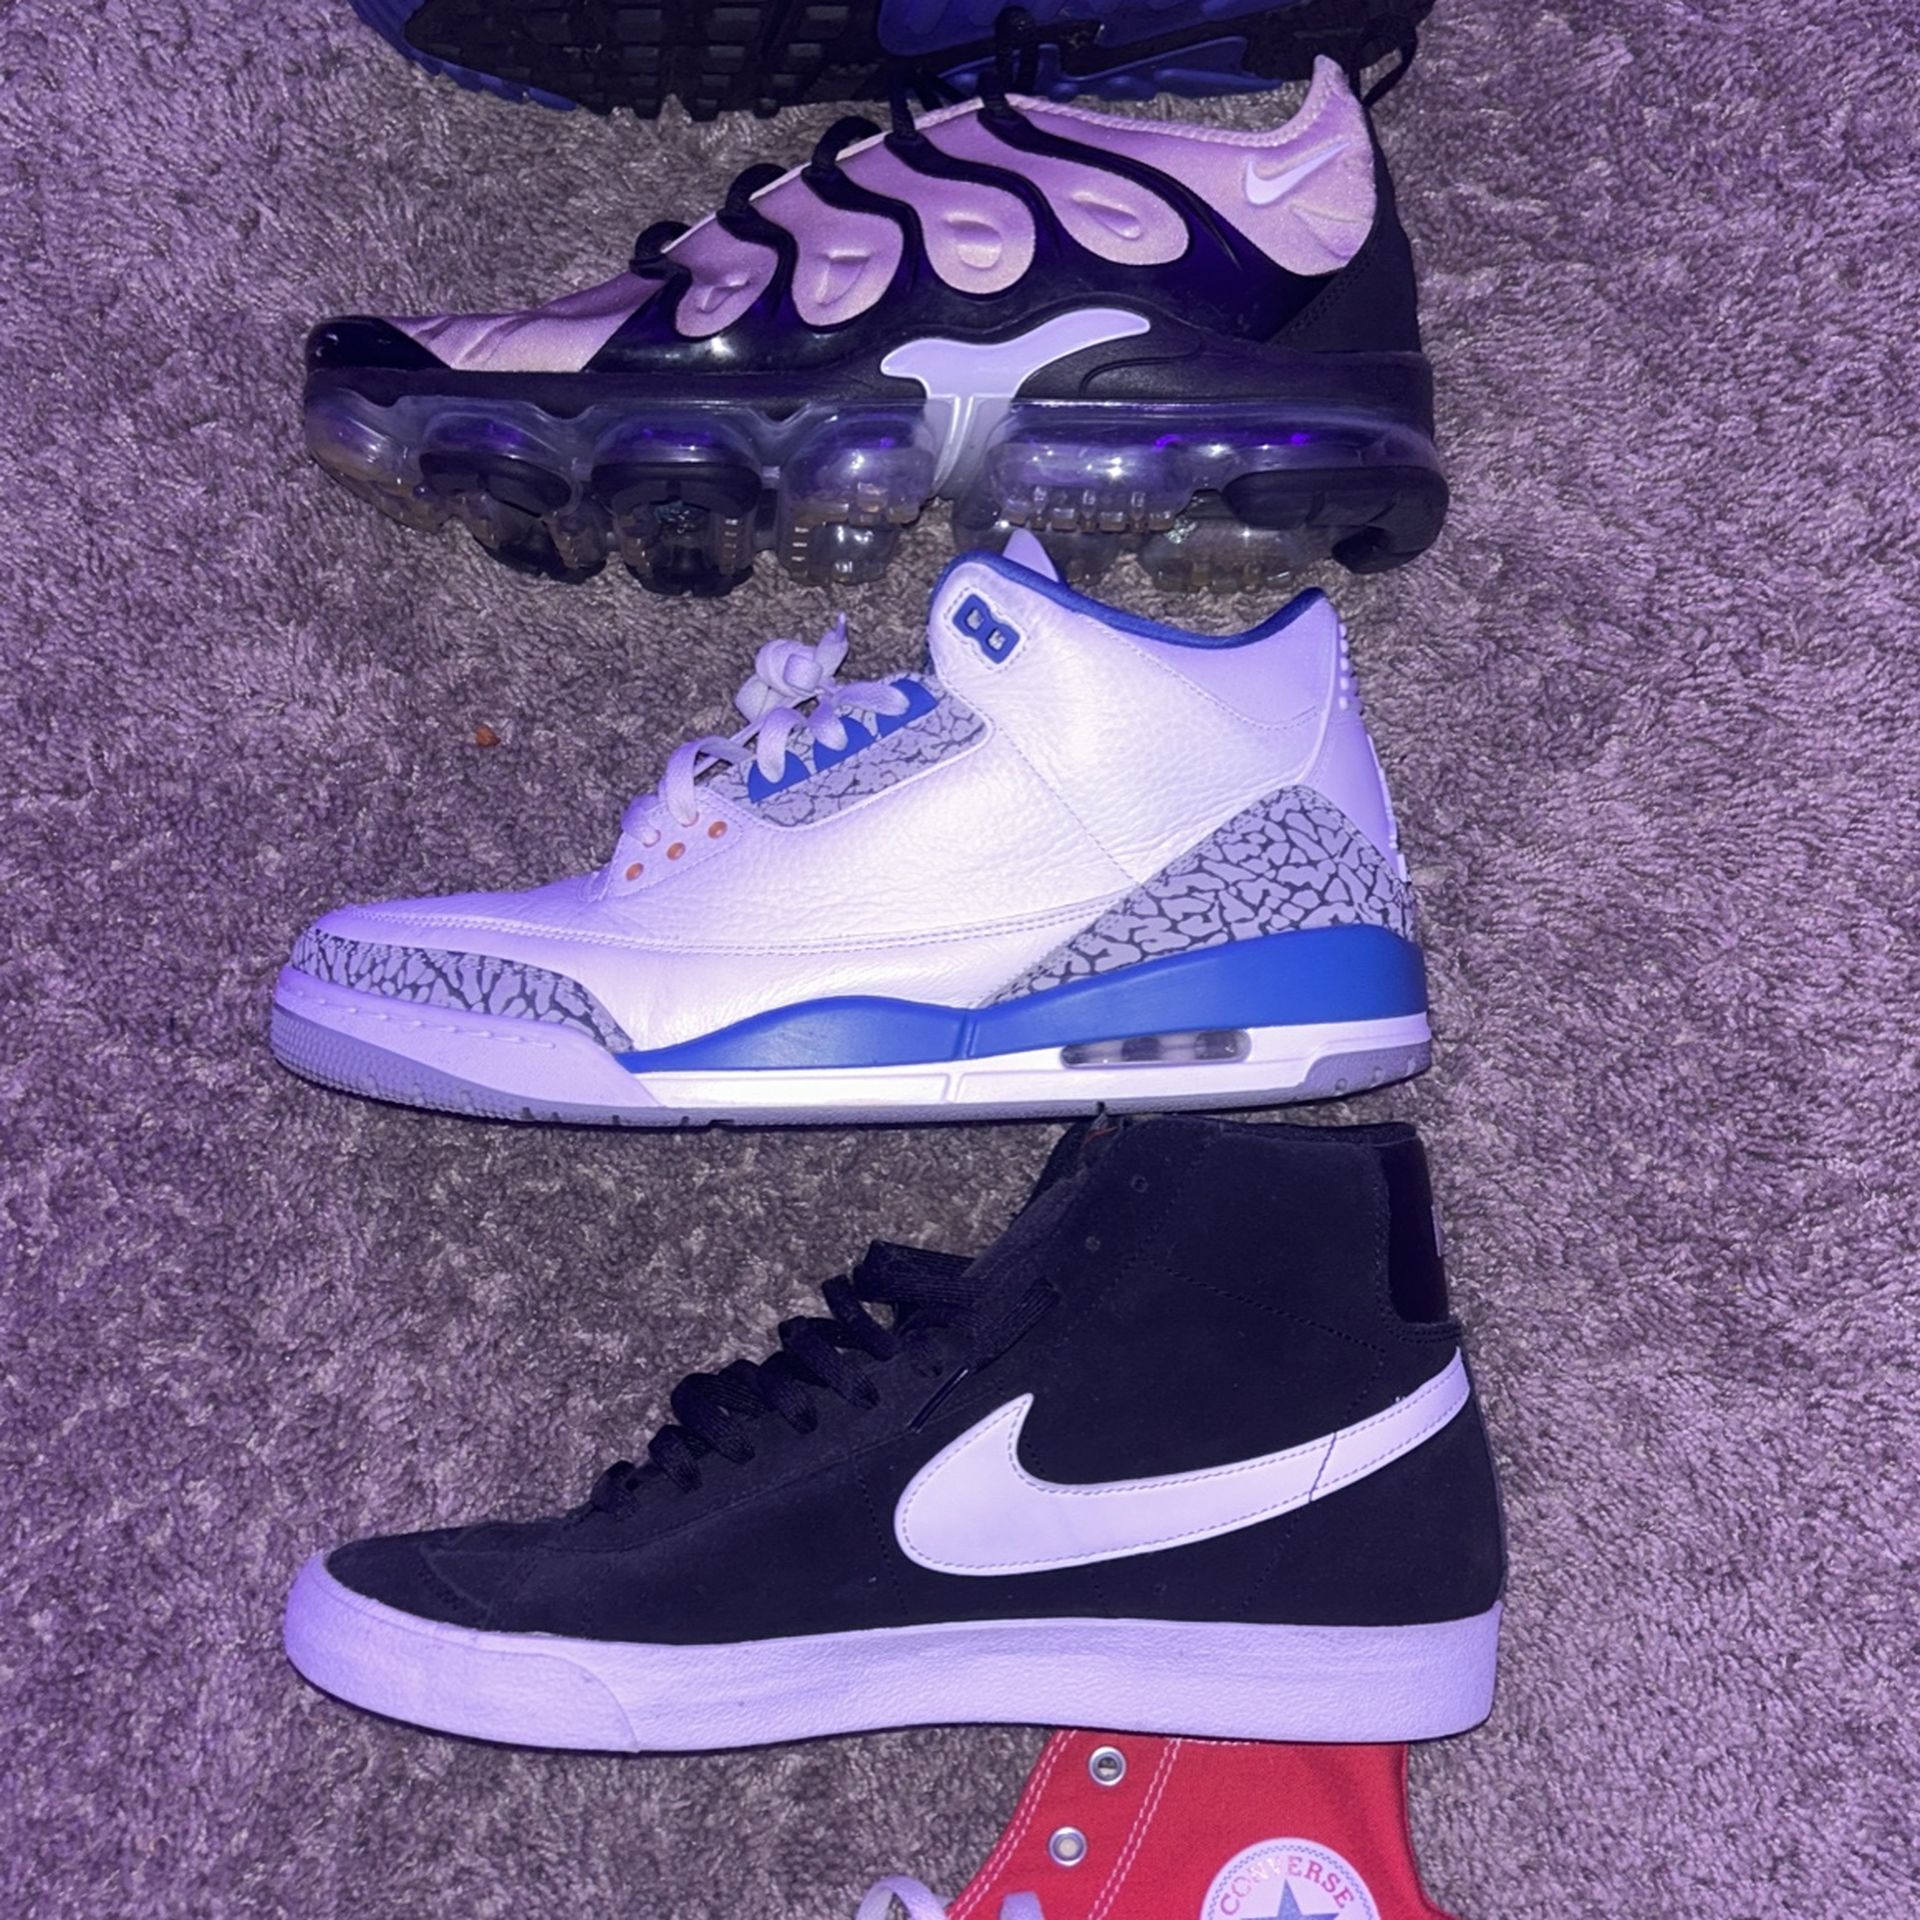 All Size 13 Jordan Nike 